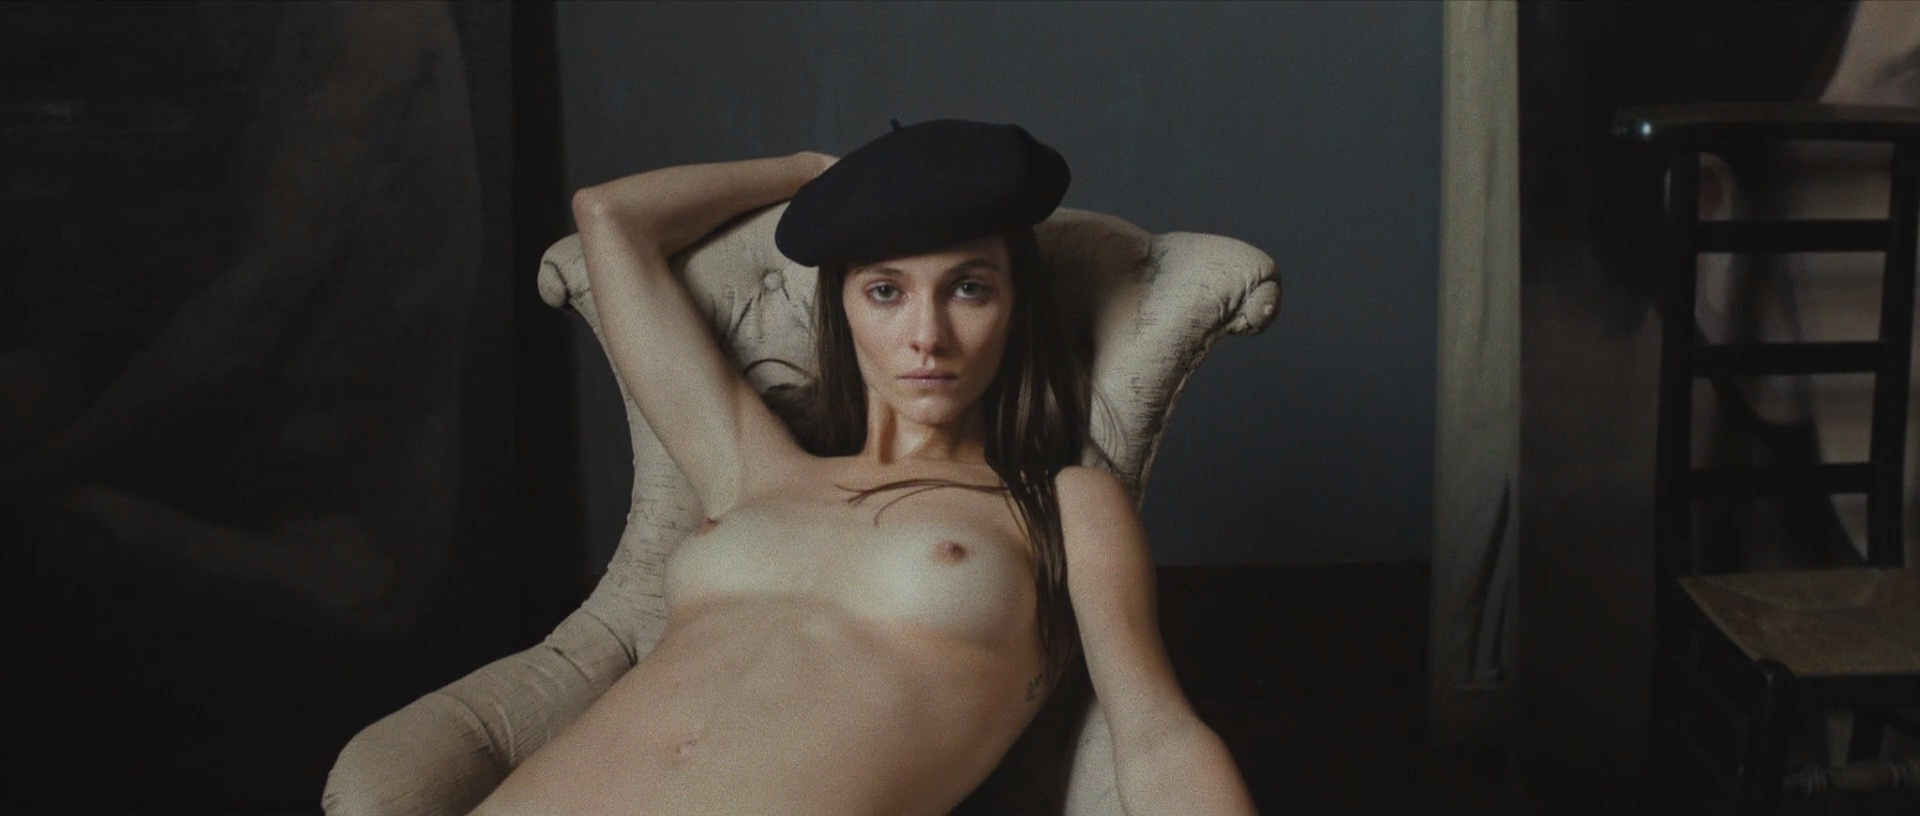 Саломе Zimmerlin nude pics.